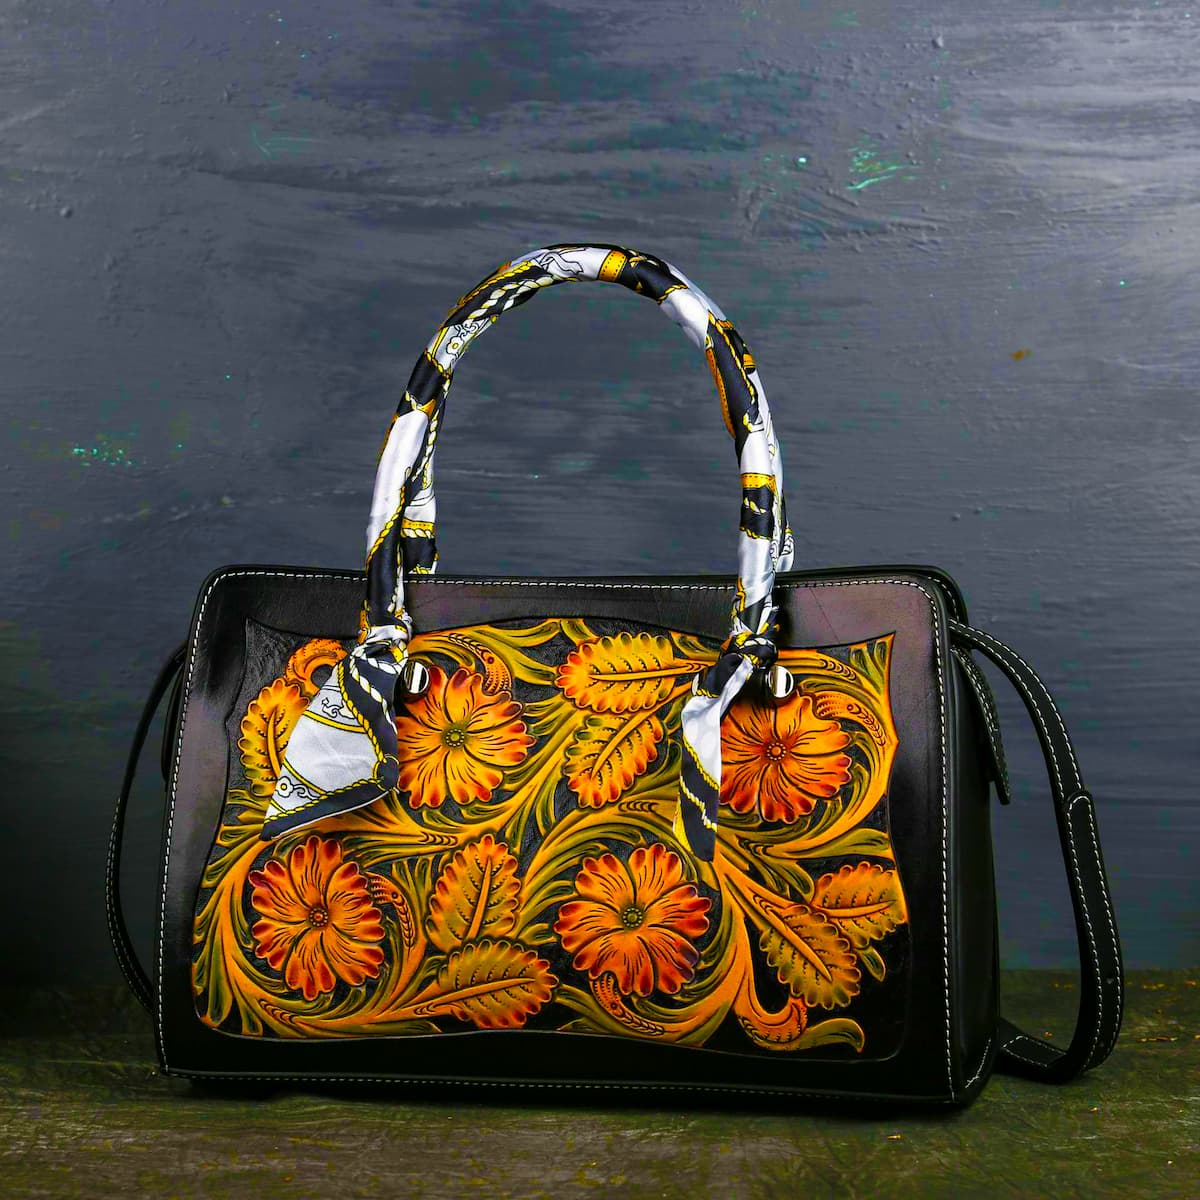 Wholesale fashion handbags USA